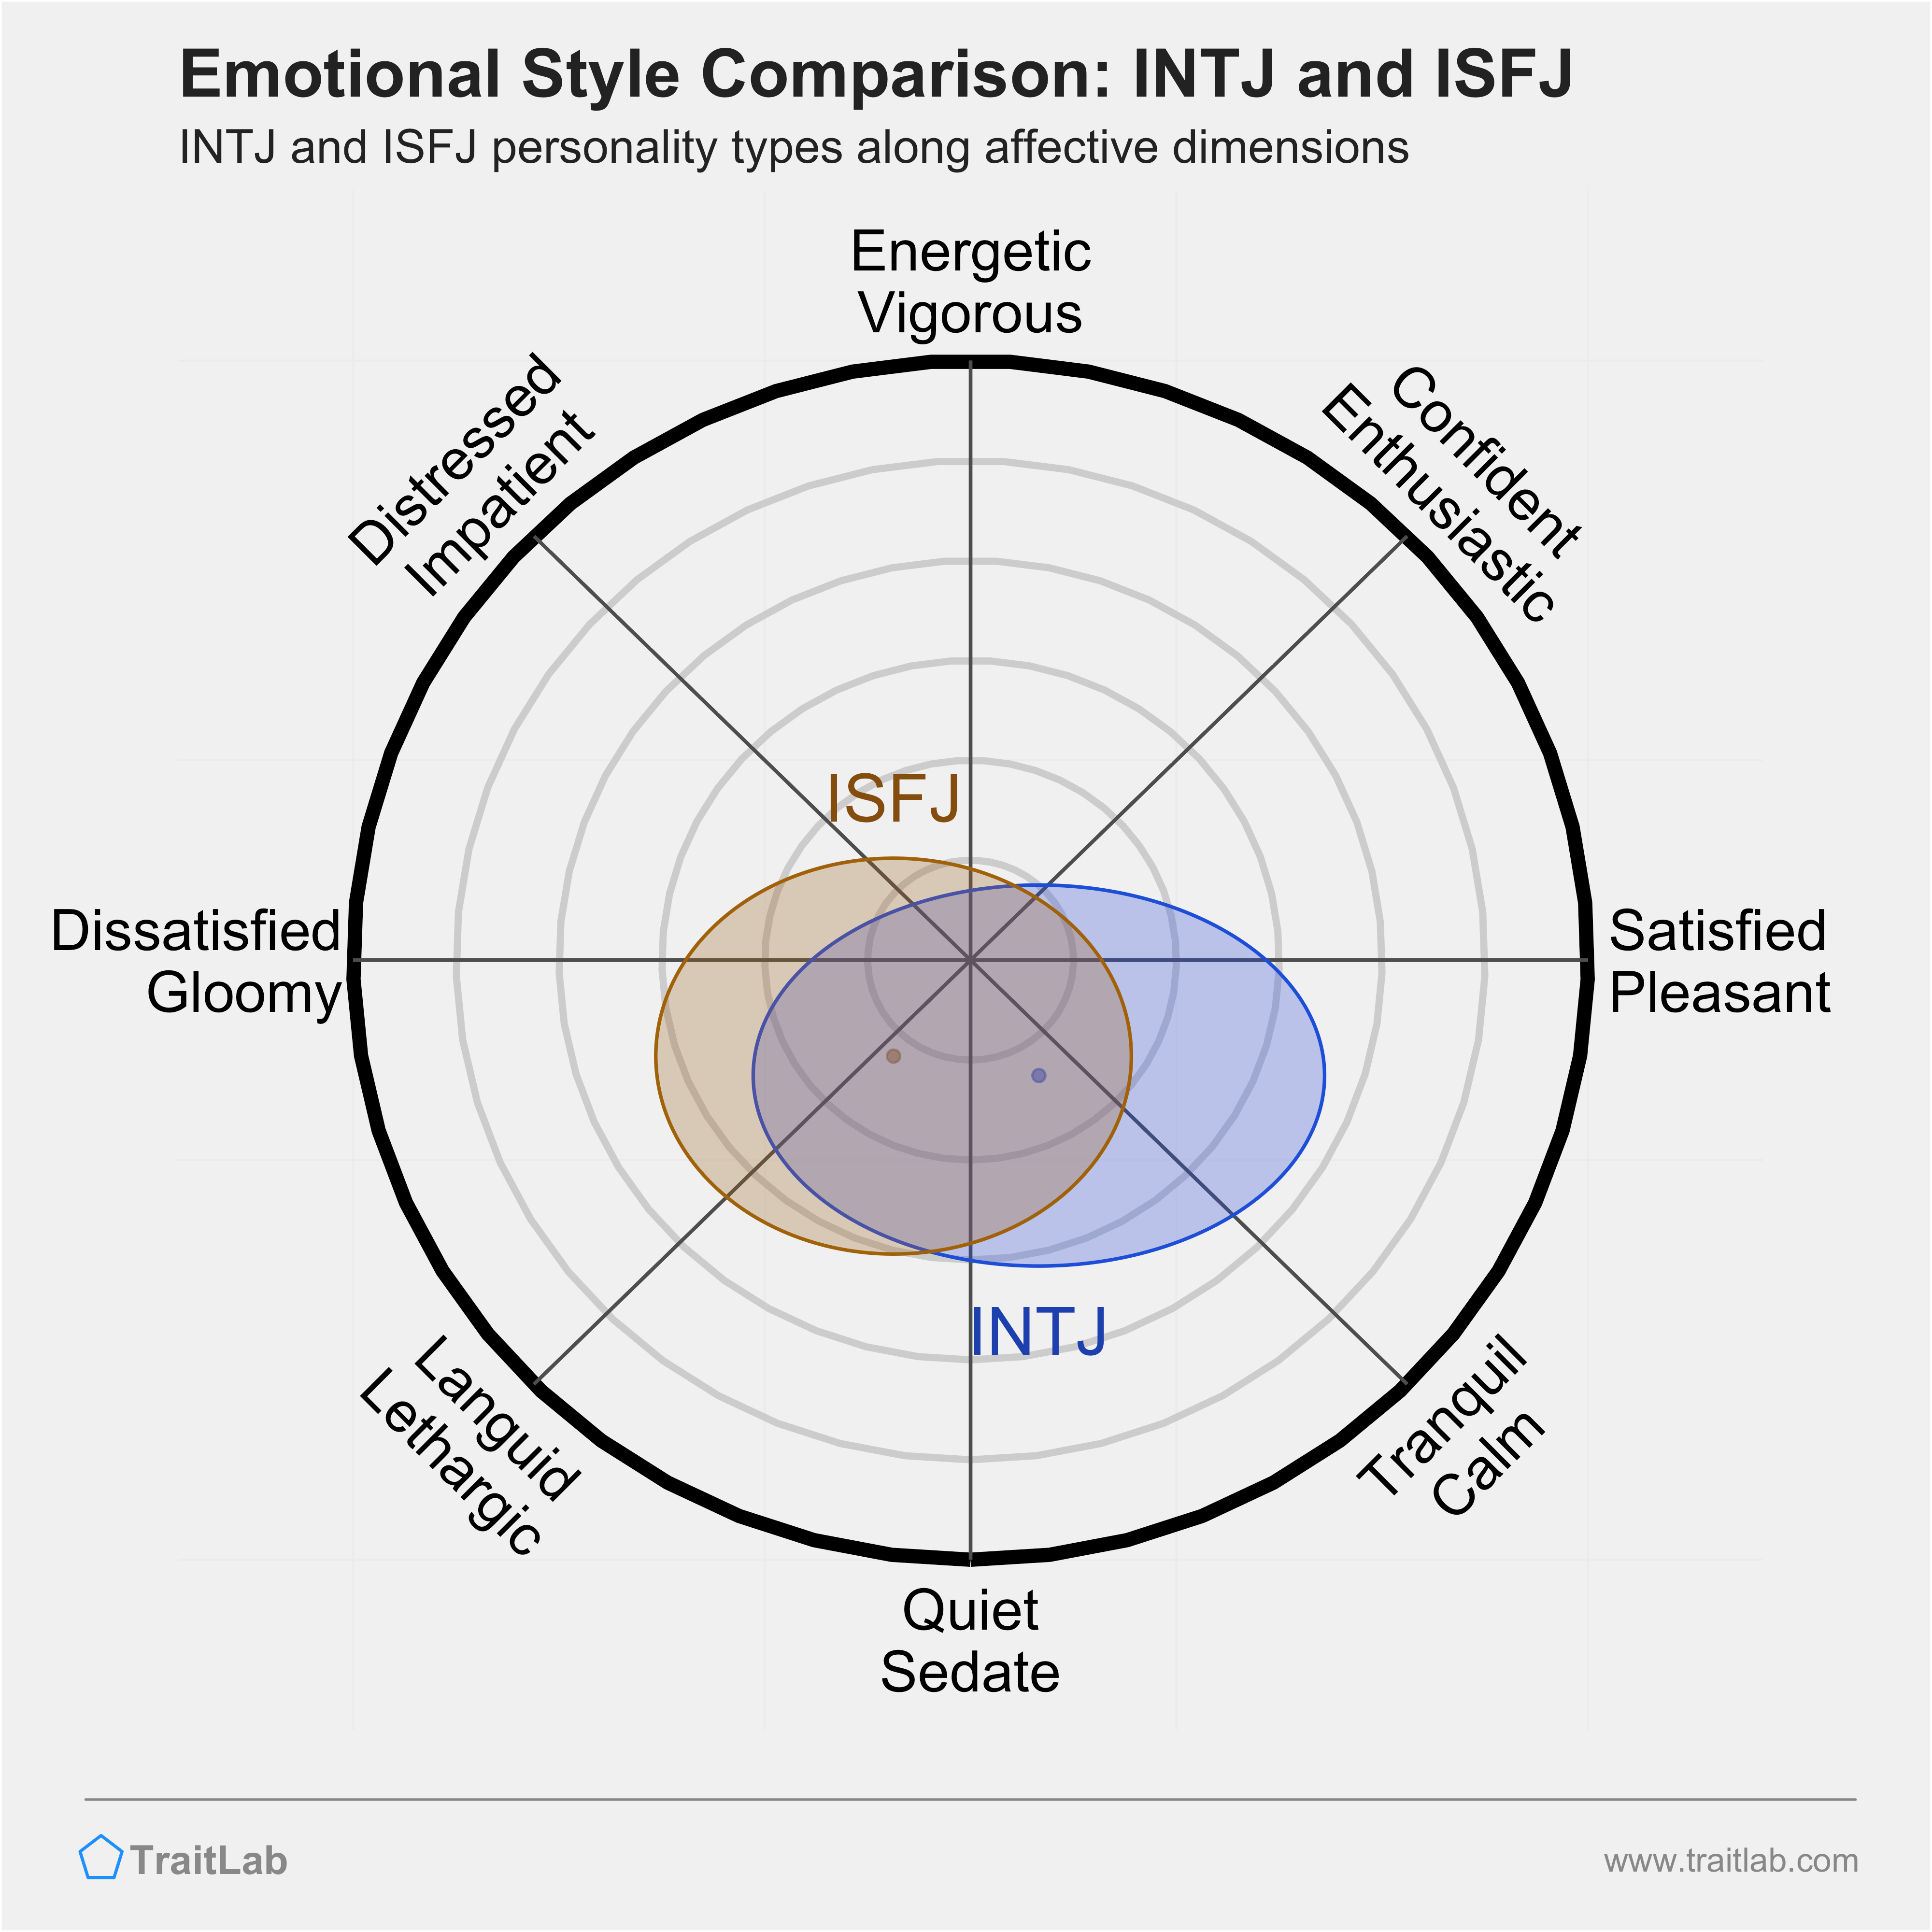 INTJ and ISFJ comparison across emotional (affective) dimensions